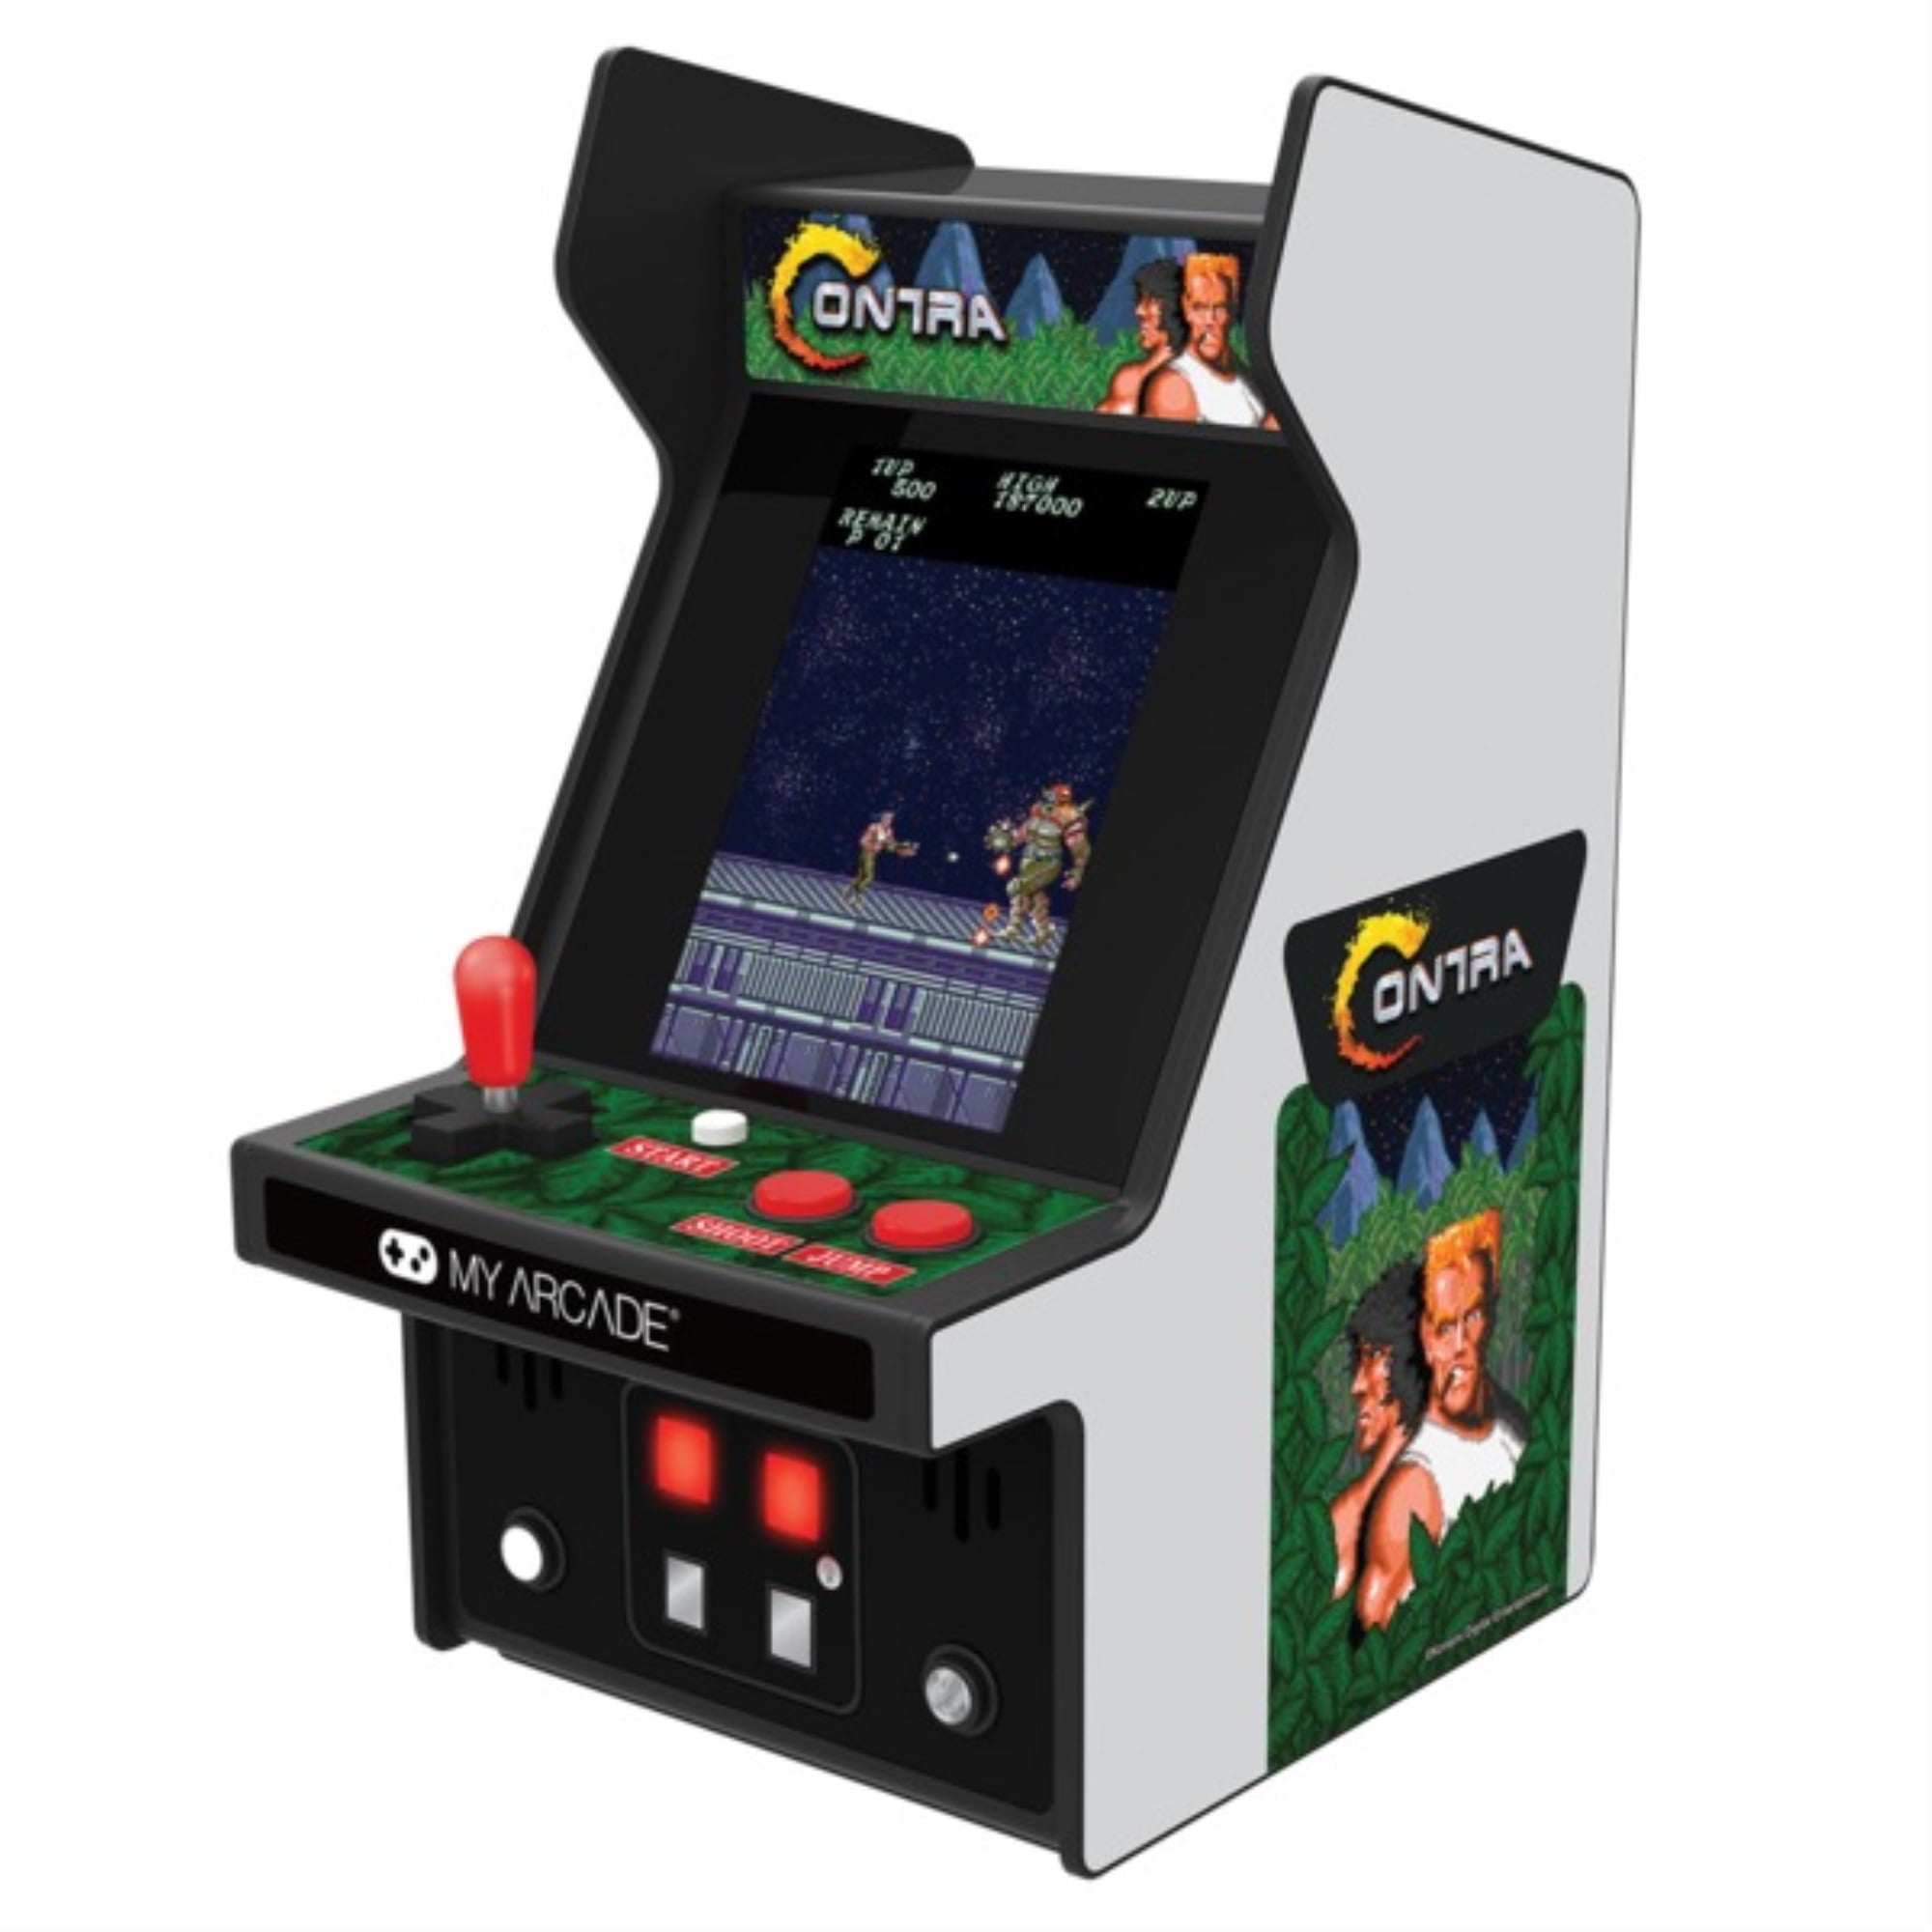 GALAGA Arcade Video Game Machine Mini Console My Arcade NEW SEALED 